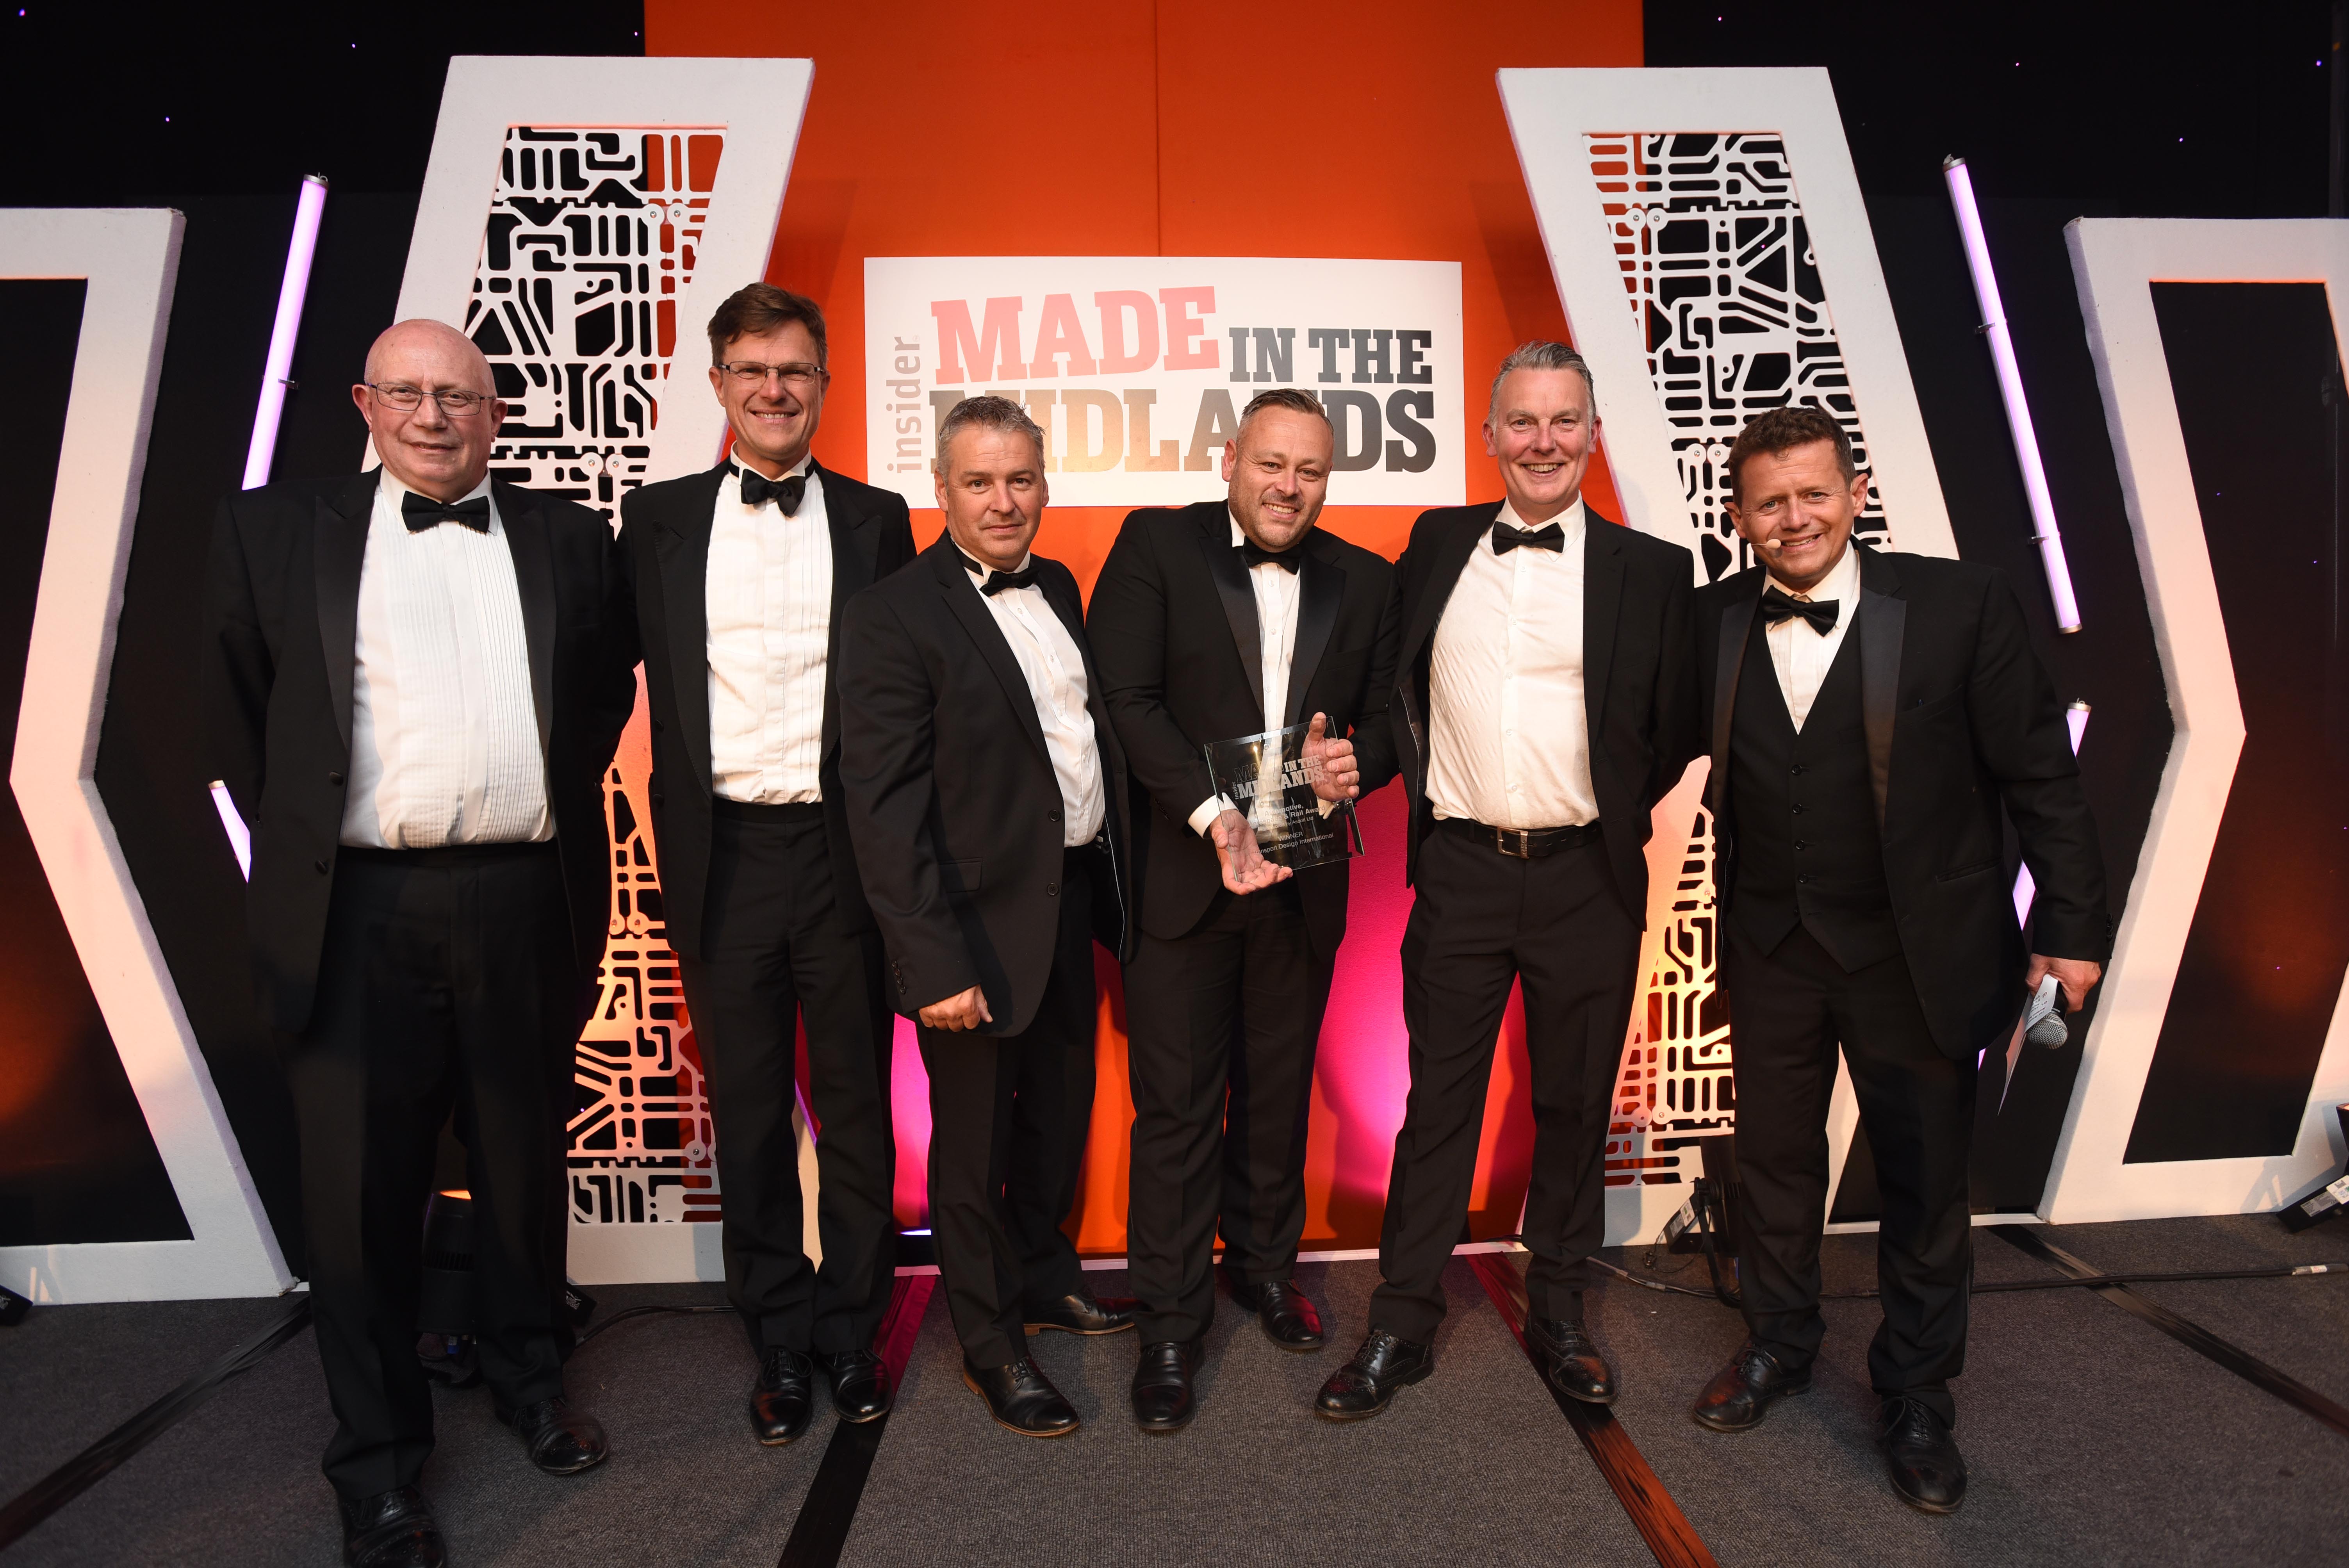 Revolution VLR Wins Made in Midlands Award 2022